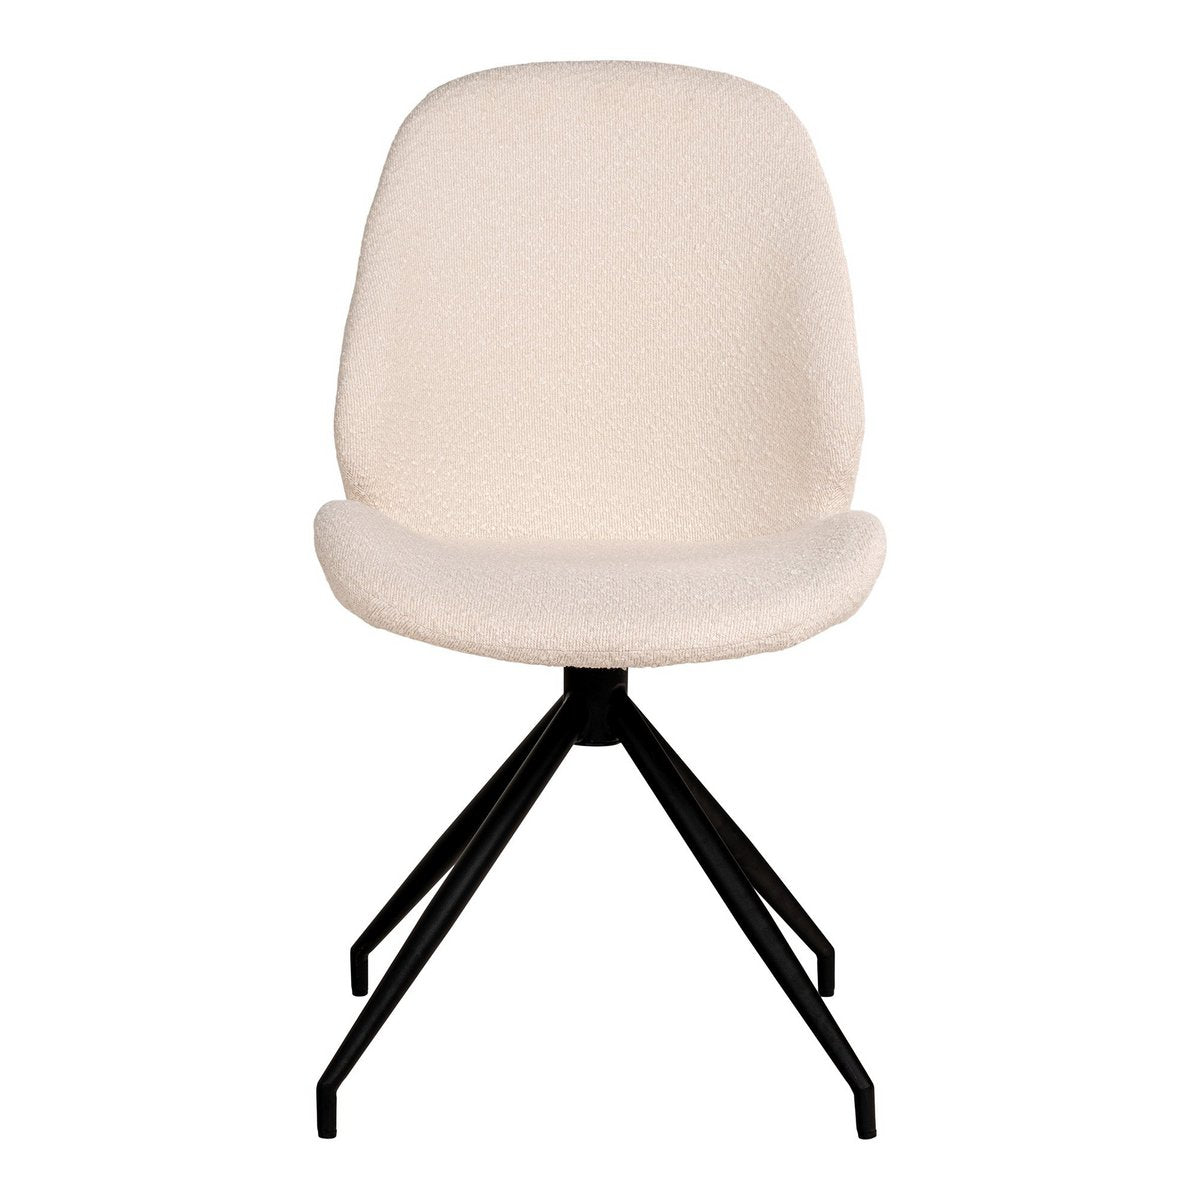 Monte Carlo Dining Chair - Eetkamerstoel in bouclé met draaibaar onderstel, wit met zwarte poten, HN1232